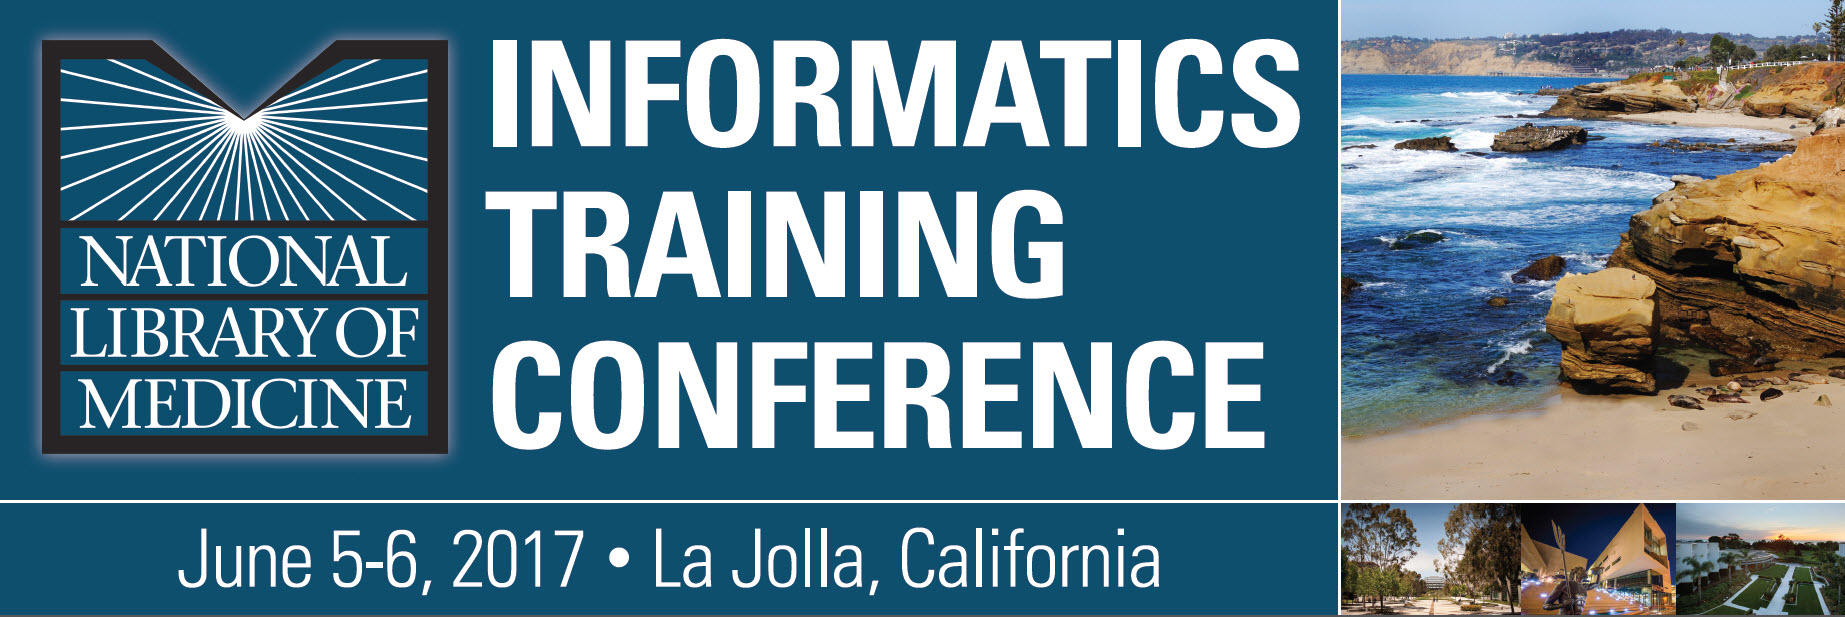 NLM Informatics Training Conference 2017 - June 5-6, 2017, LaJolla, CA